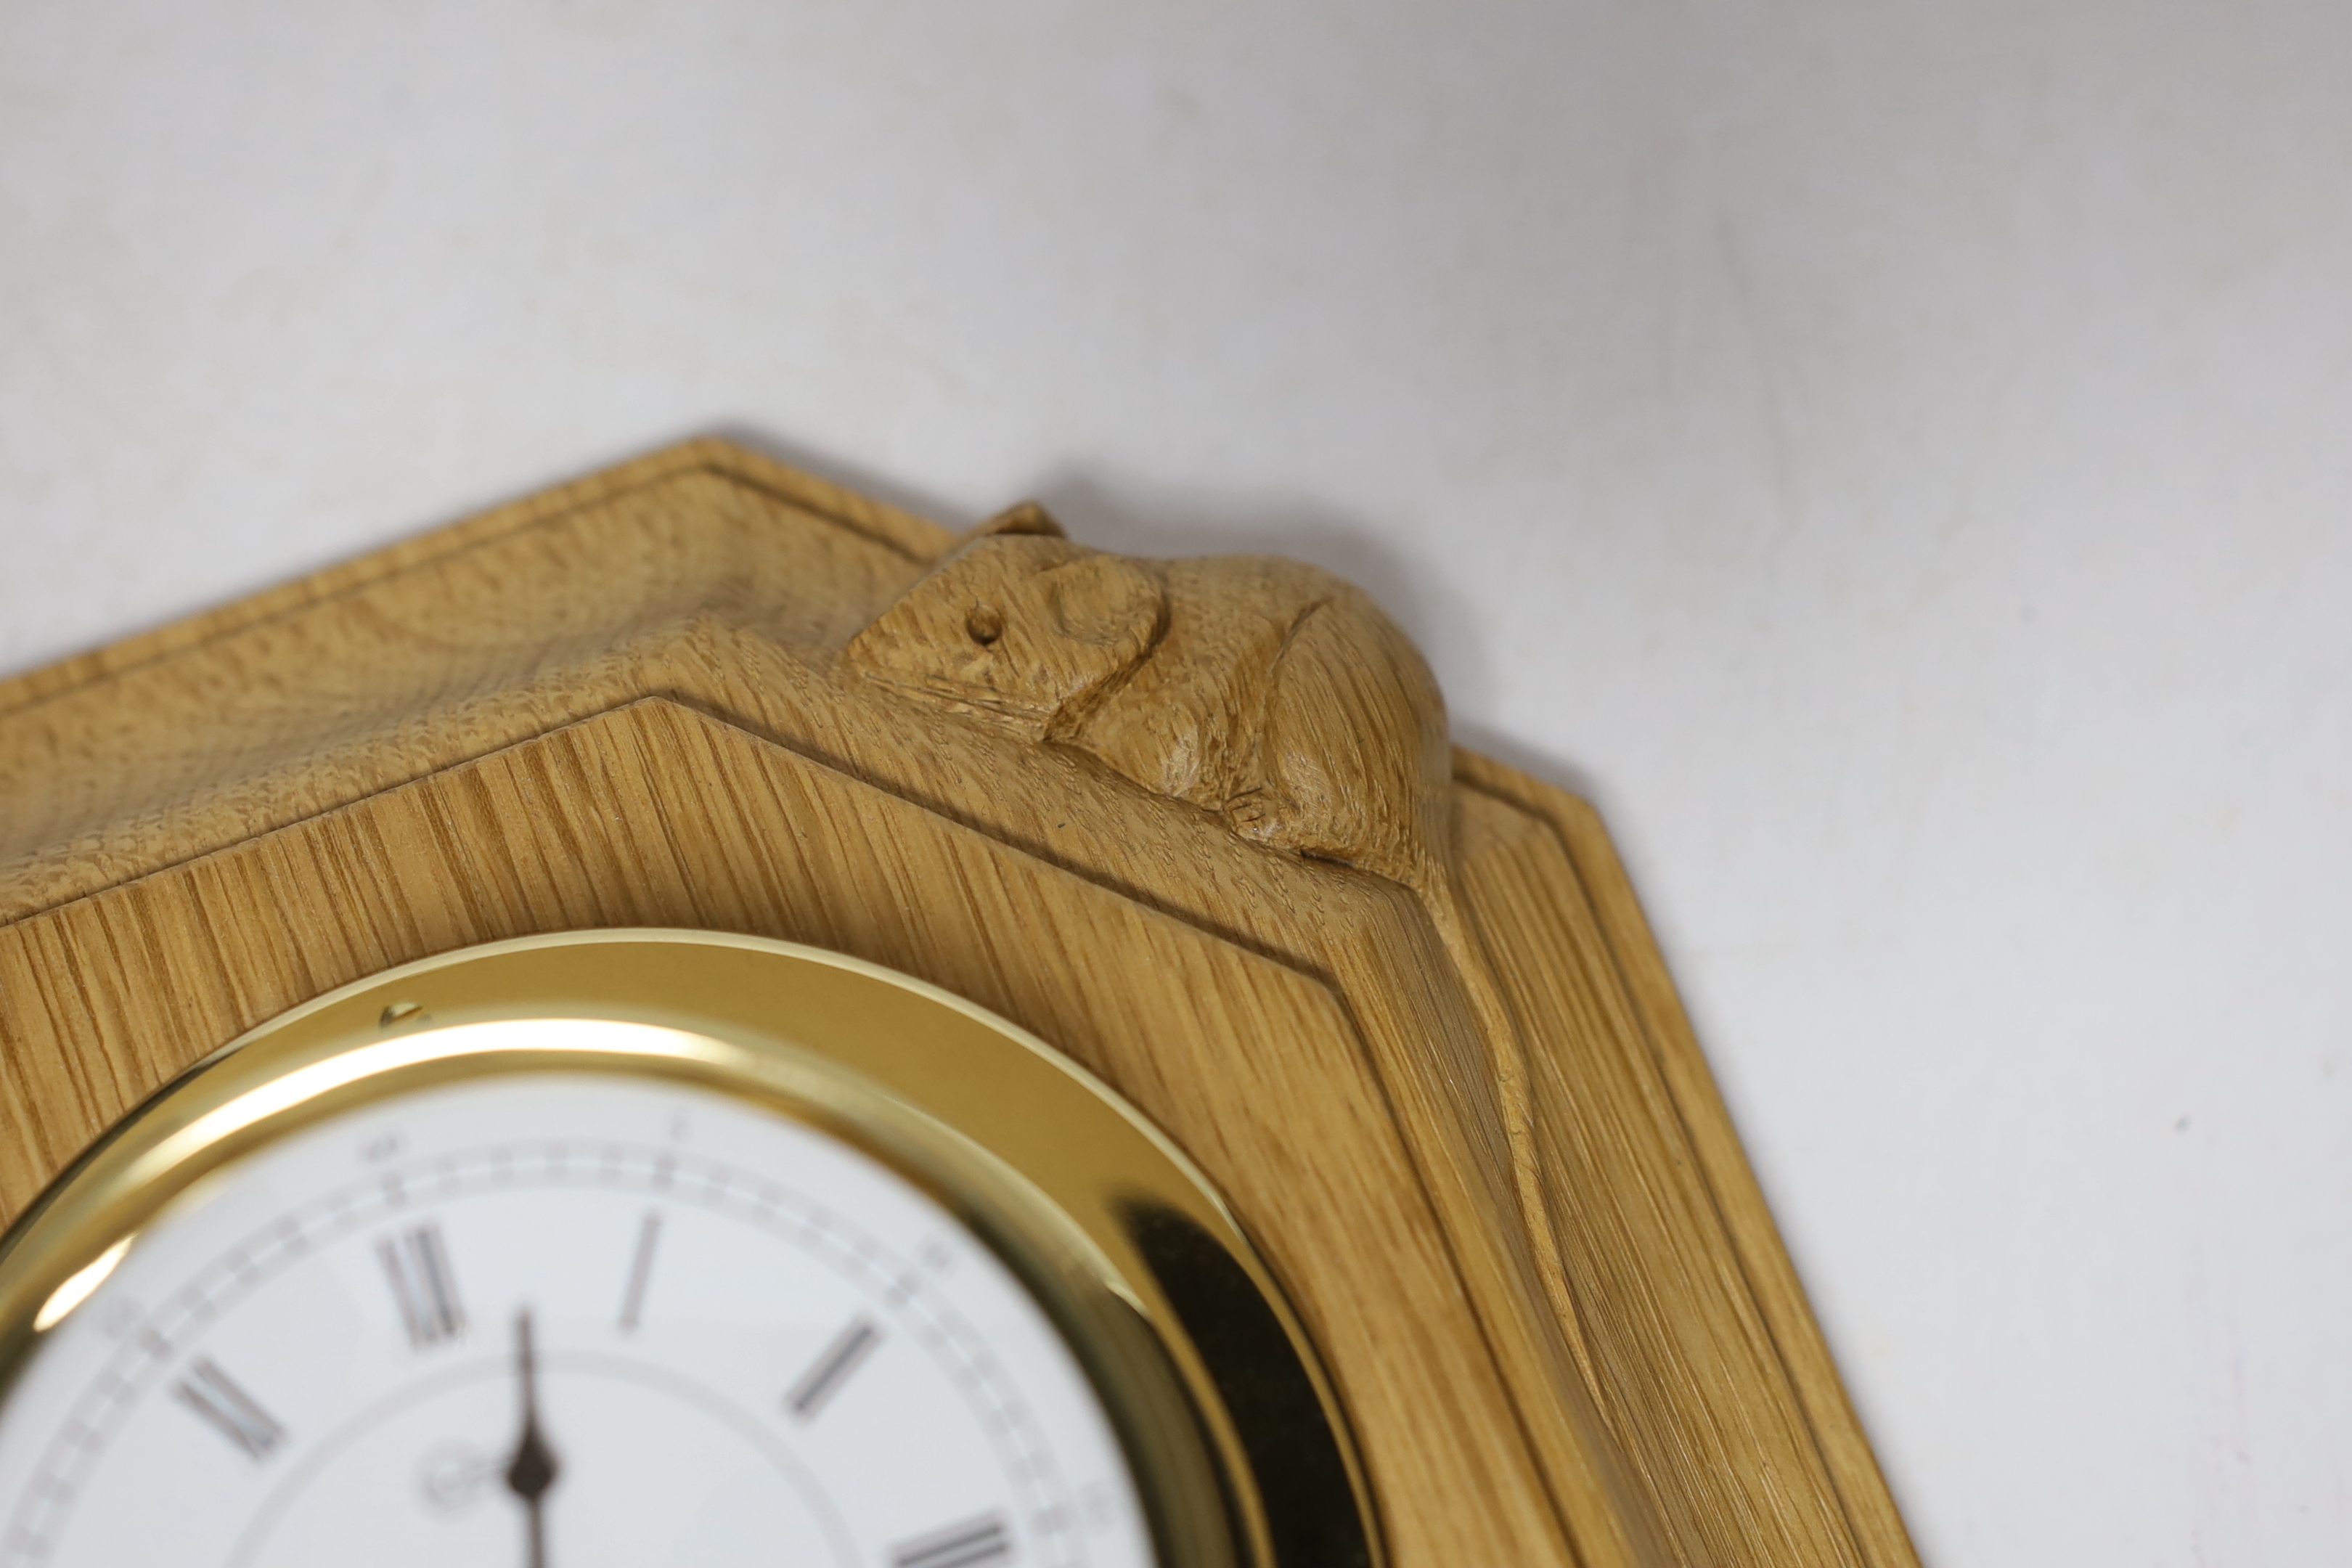 A Mouseman oak octagonal wall timepiece, 19cm